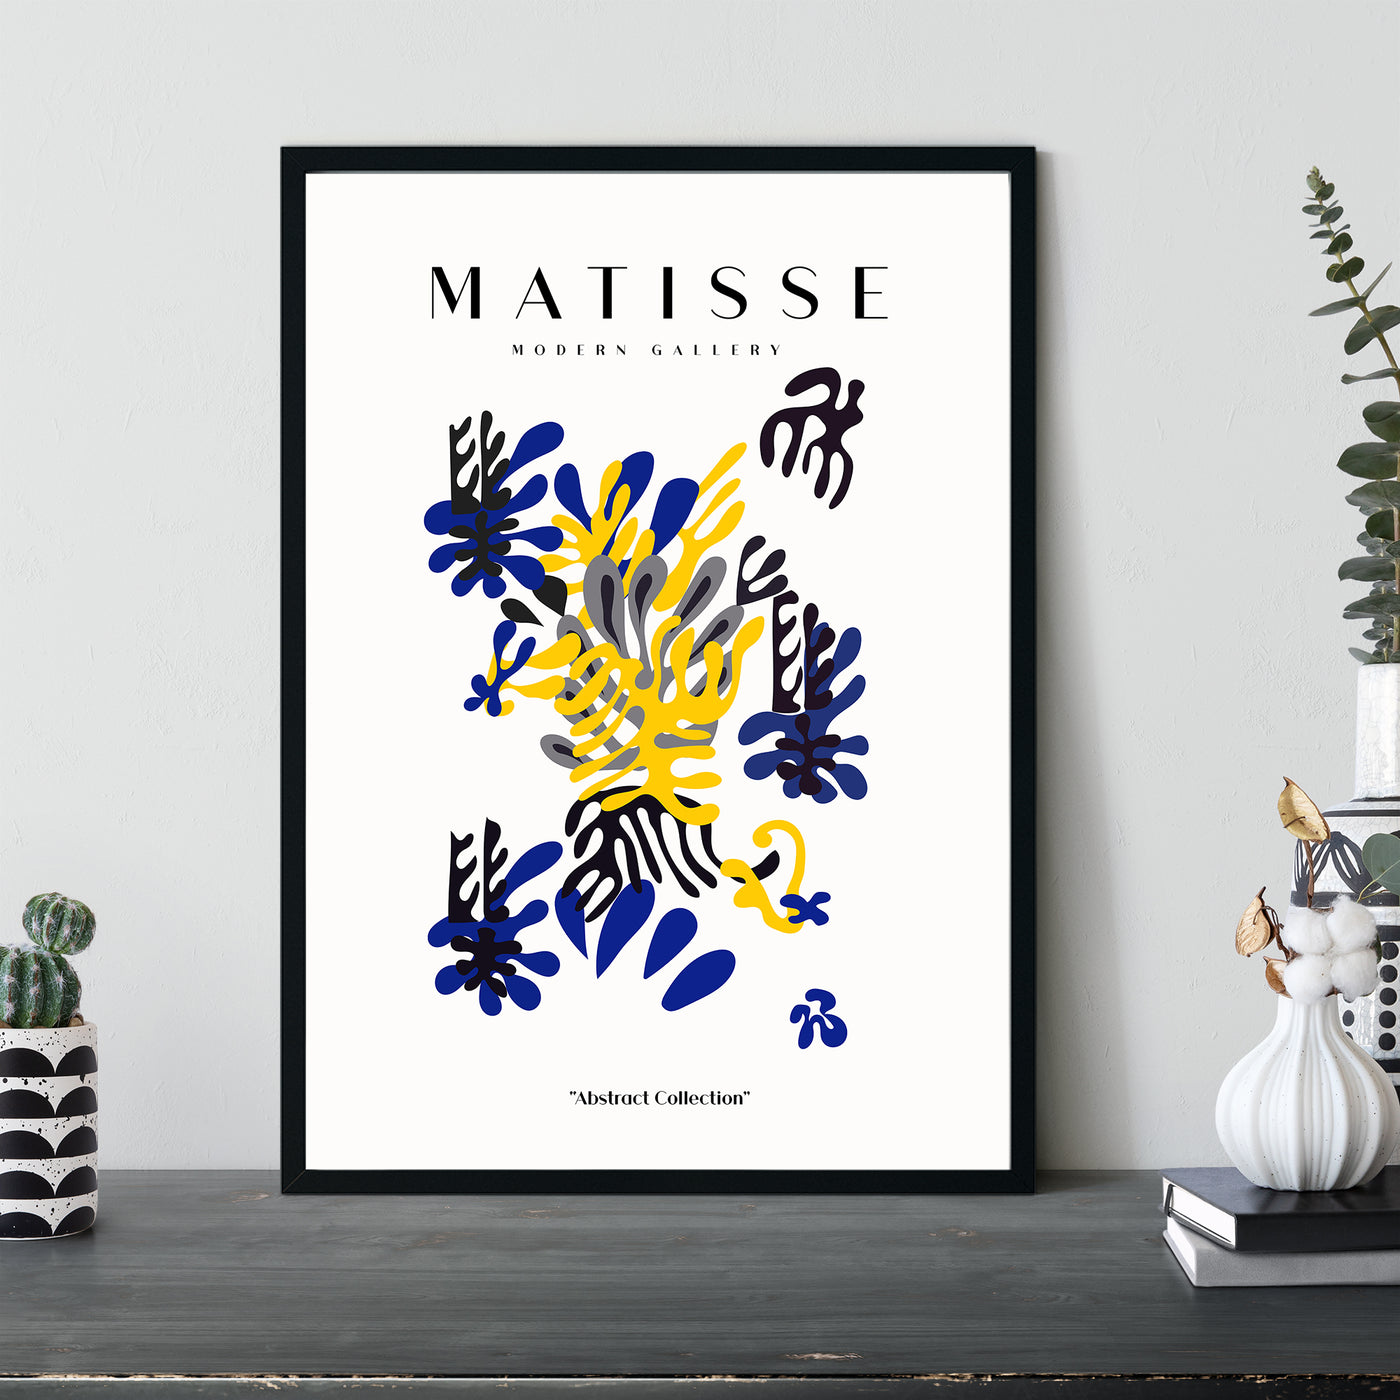 Henri Matisse - #48